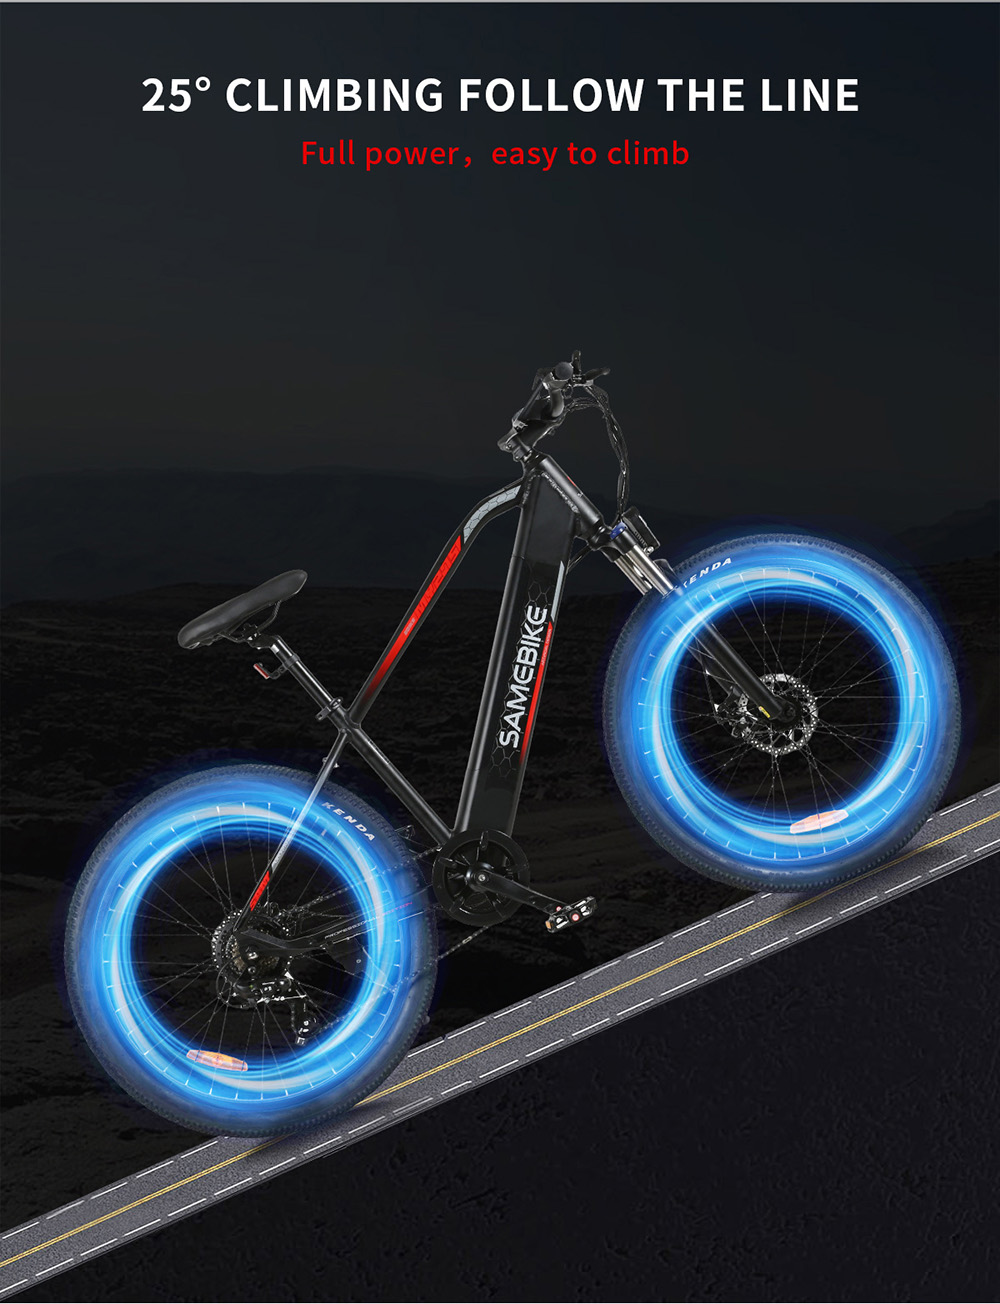 SAMEBIKEMY-275 10.4Ah 500W 48V 27.5inch Electric Bike 15mph Top Speed 80km Mileage Range Max Load 150kg